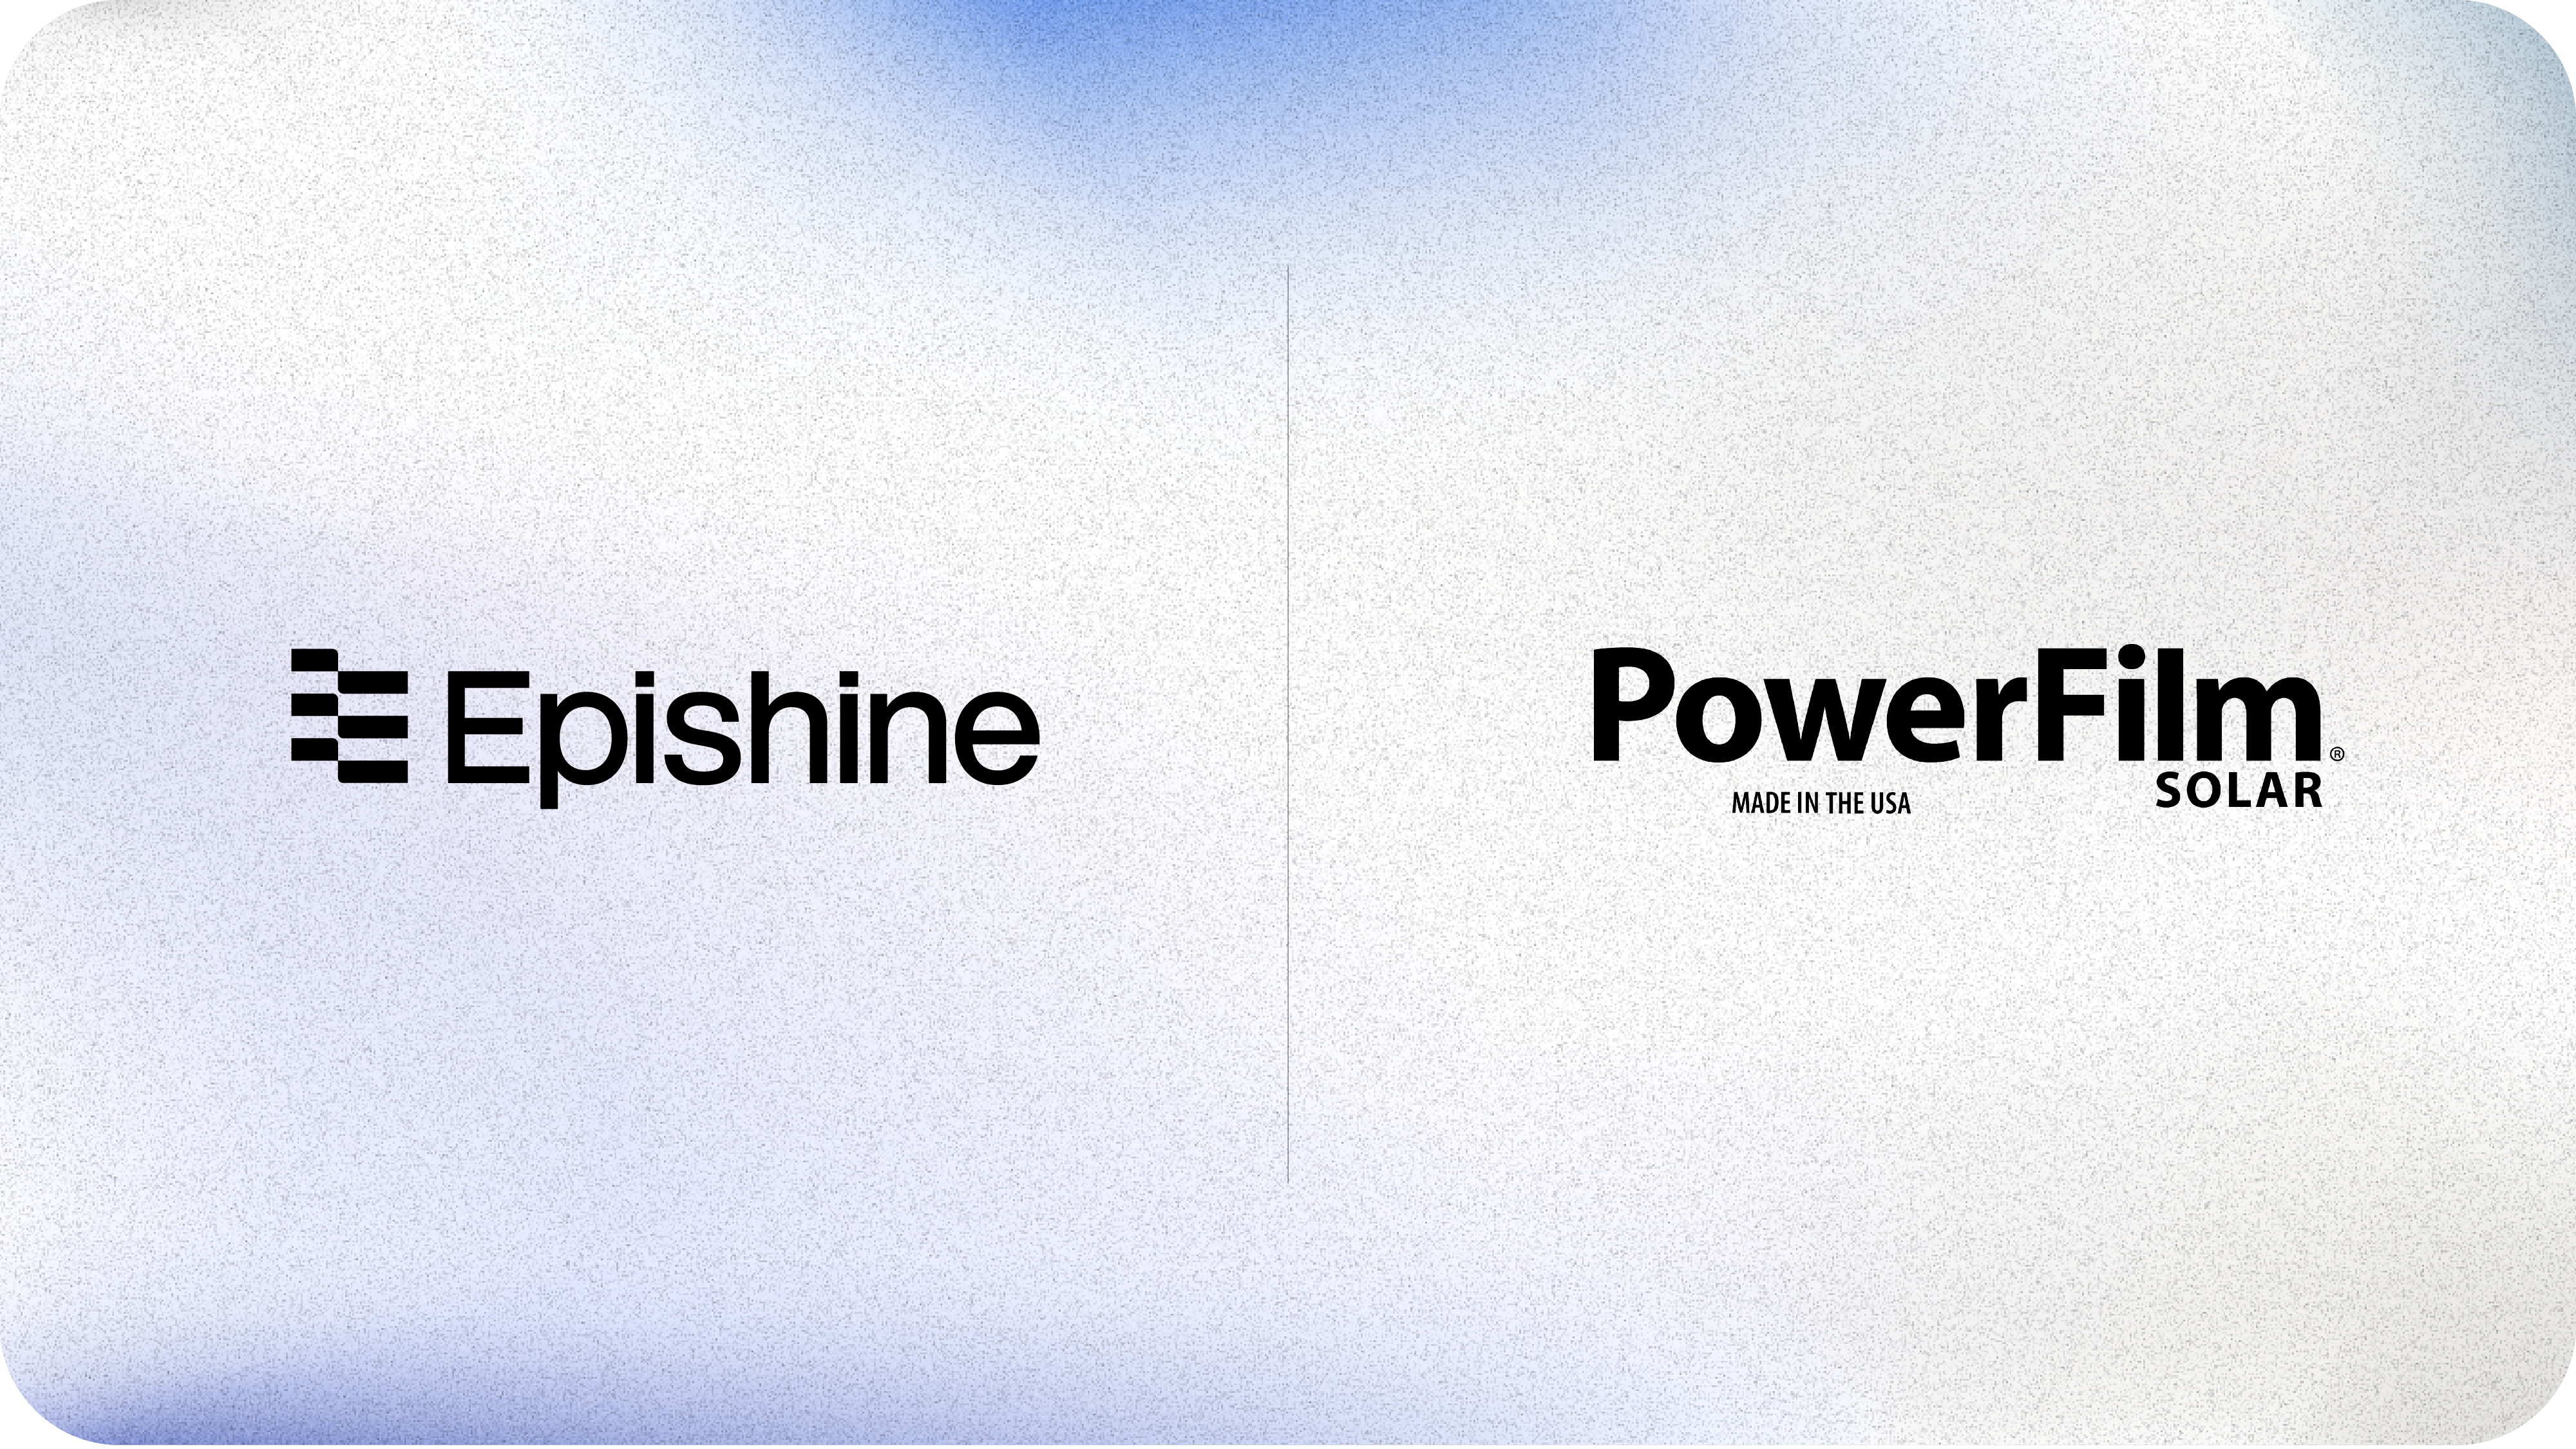 Epishine and PowerFilm Solar